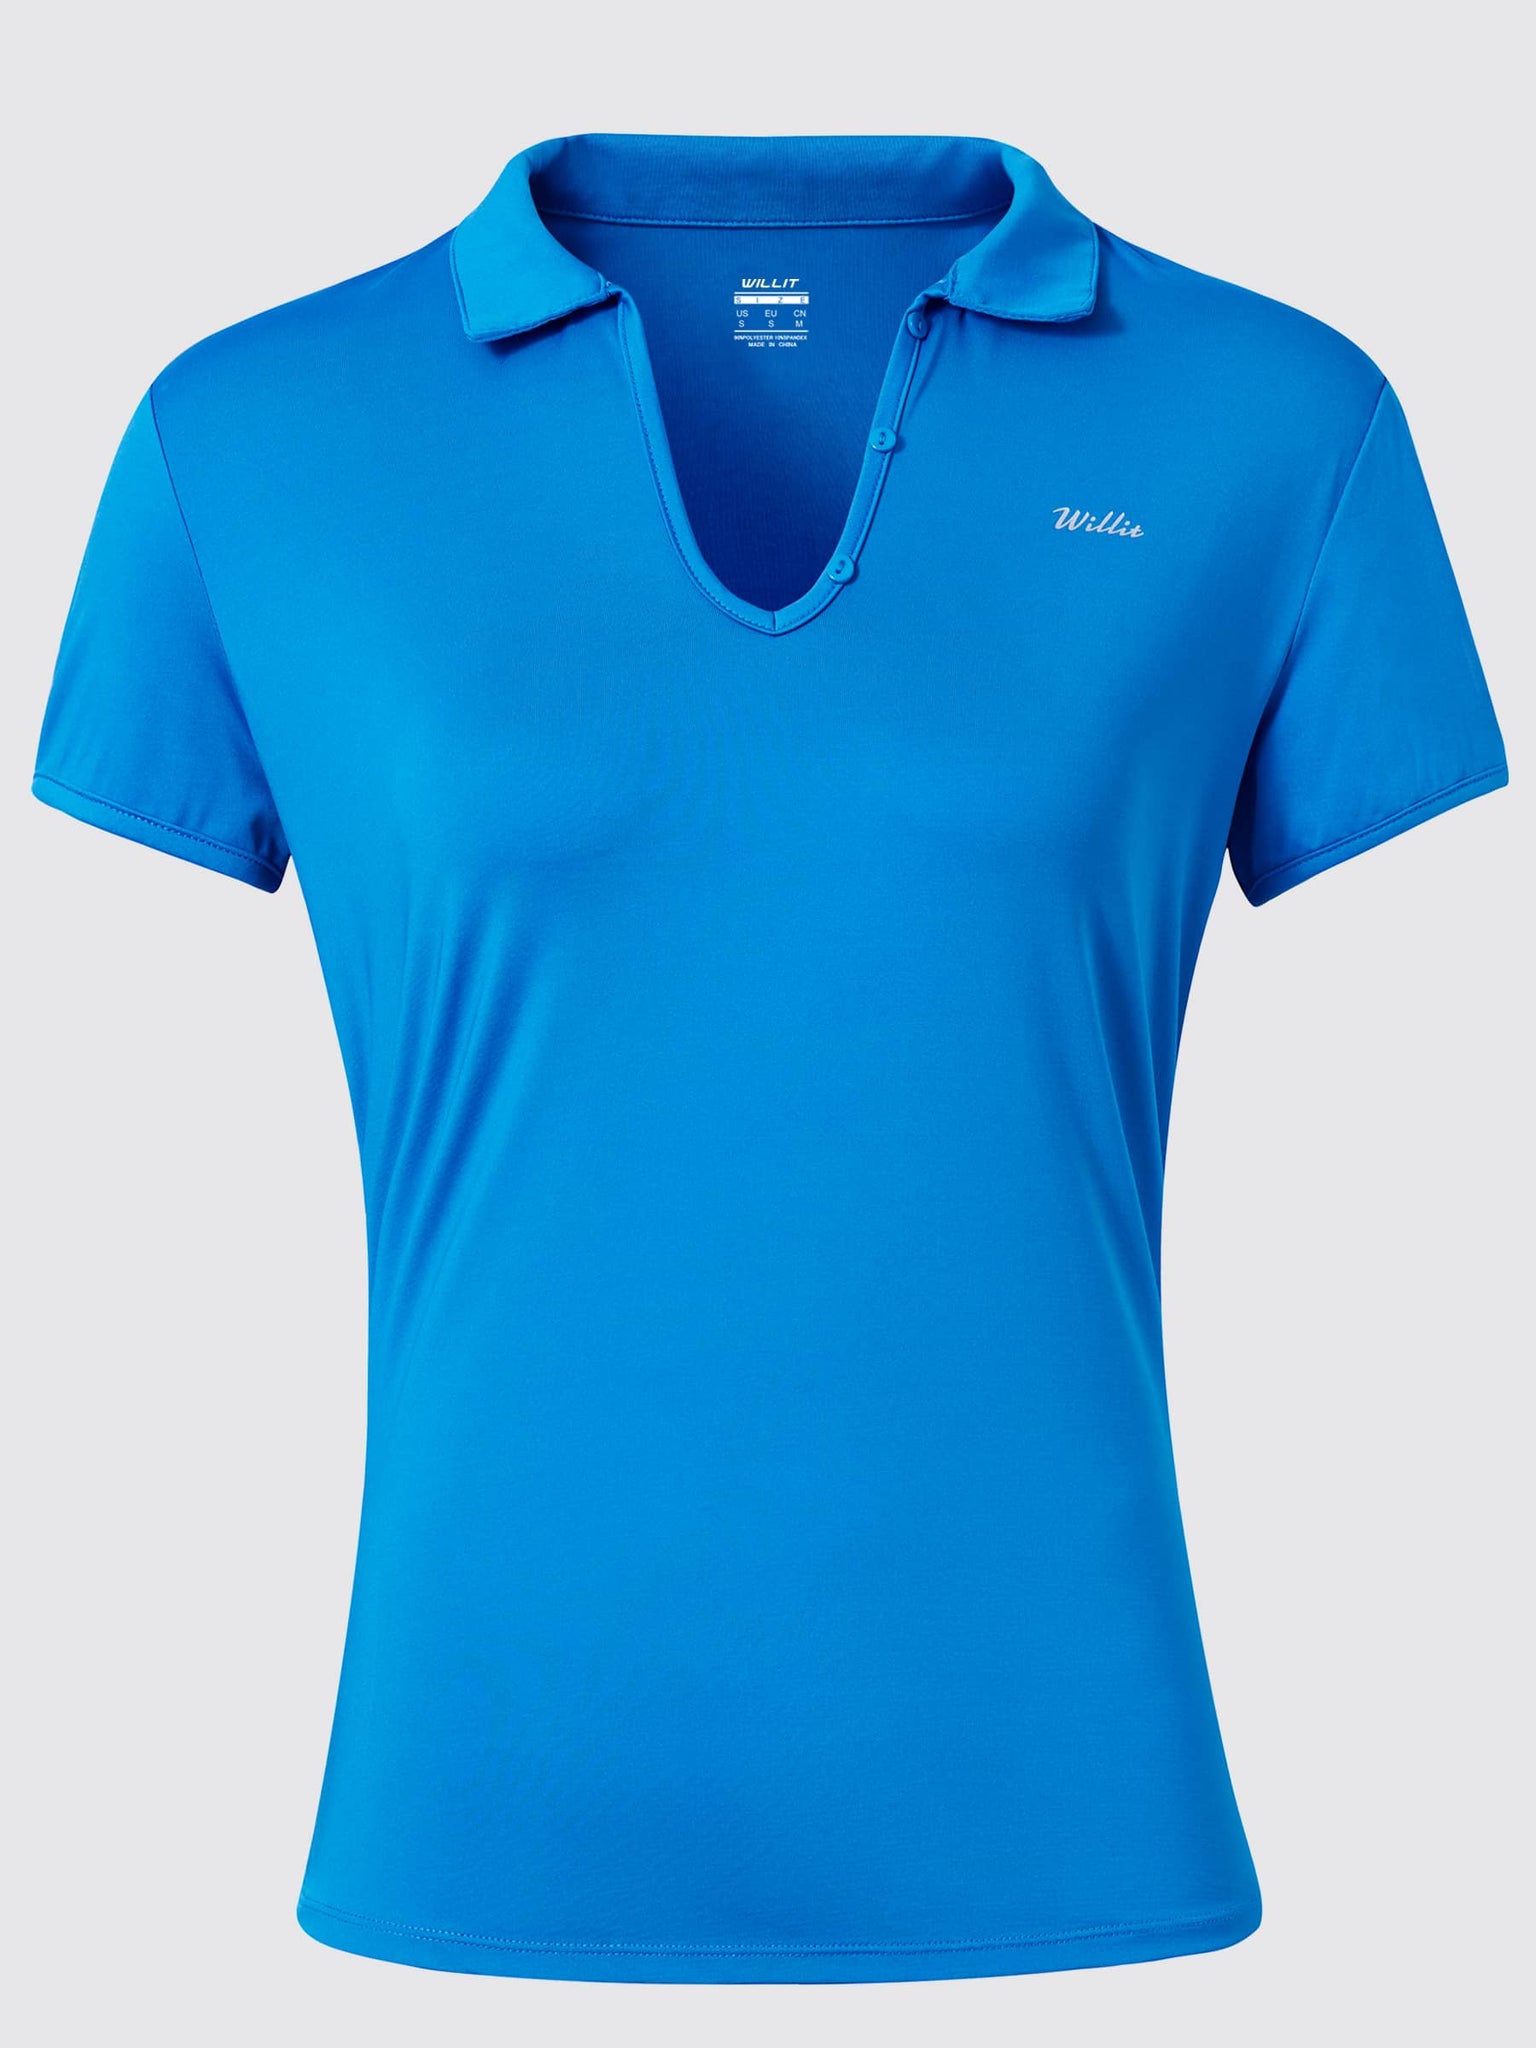 Willit Women's Golf Polo Short Sleeve Shirts_Blue1